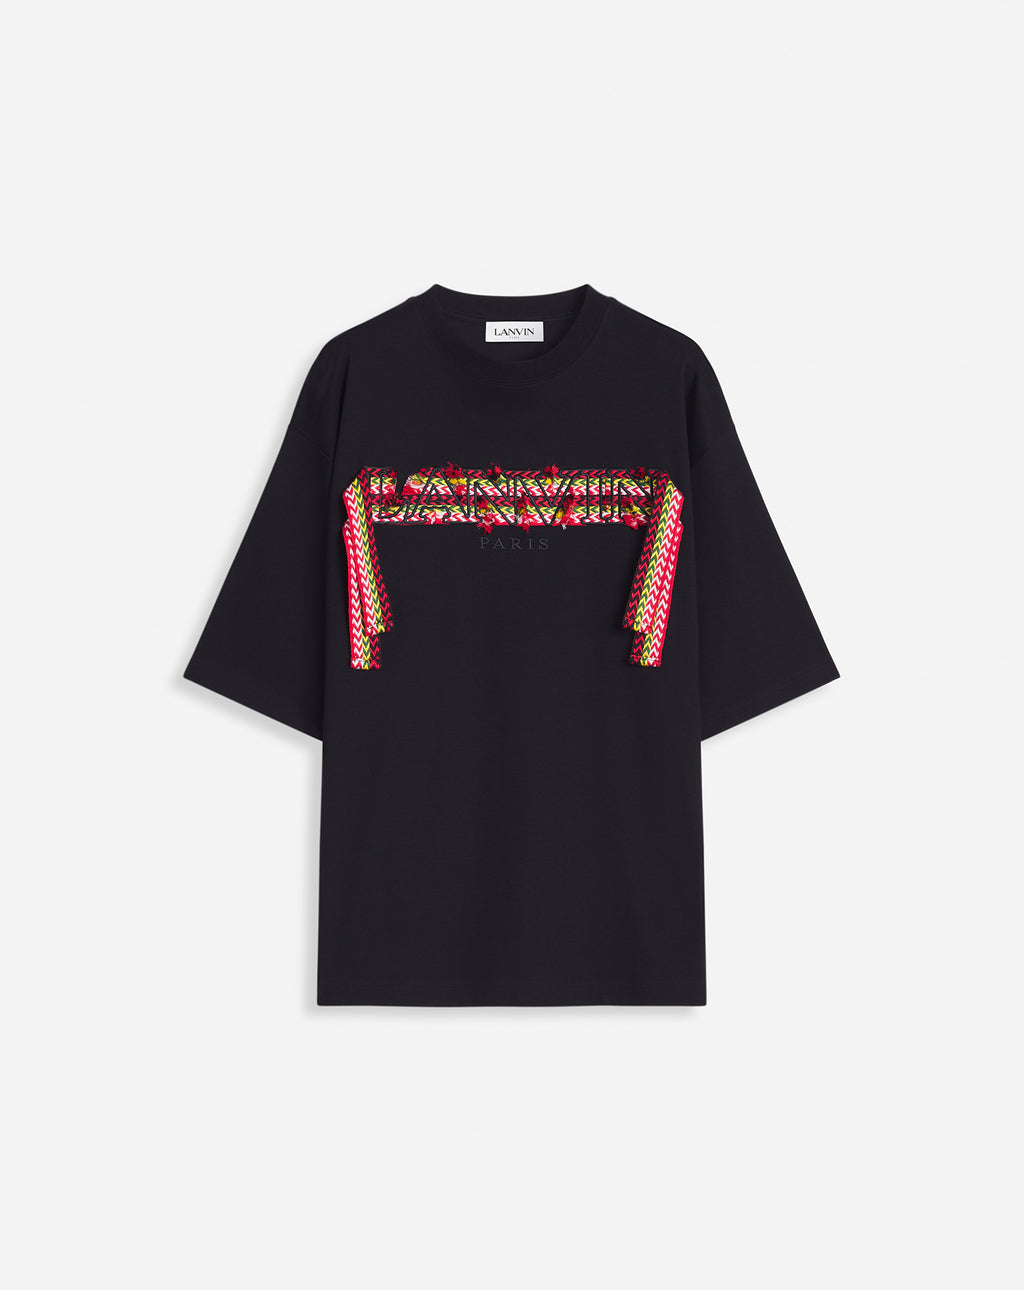 Curb lace lanvin oversized t-shirt